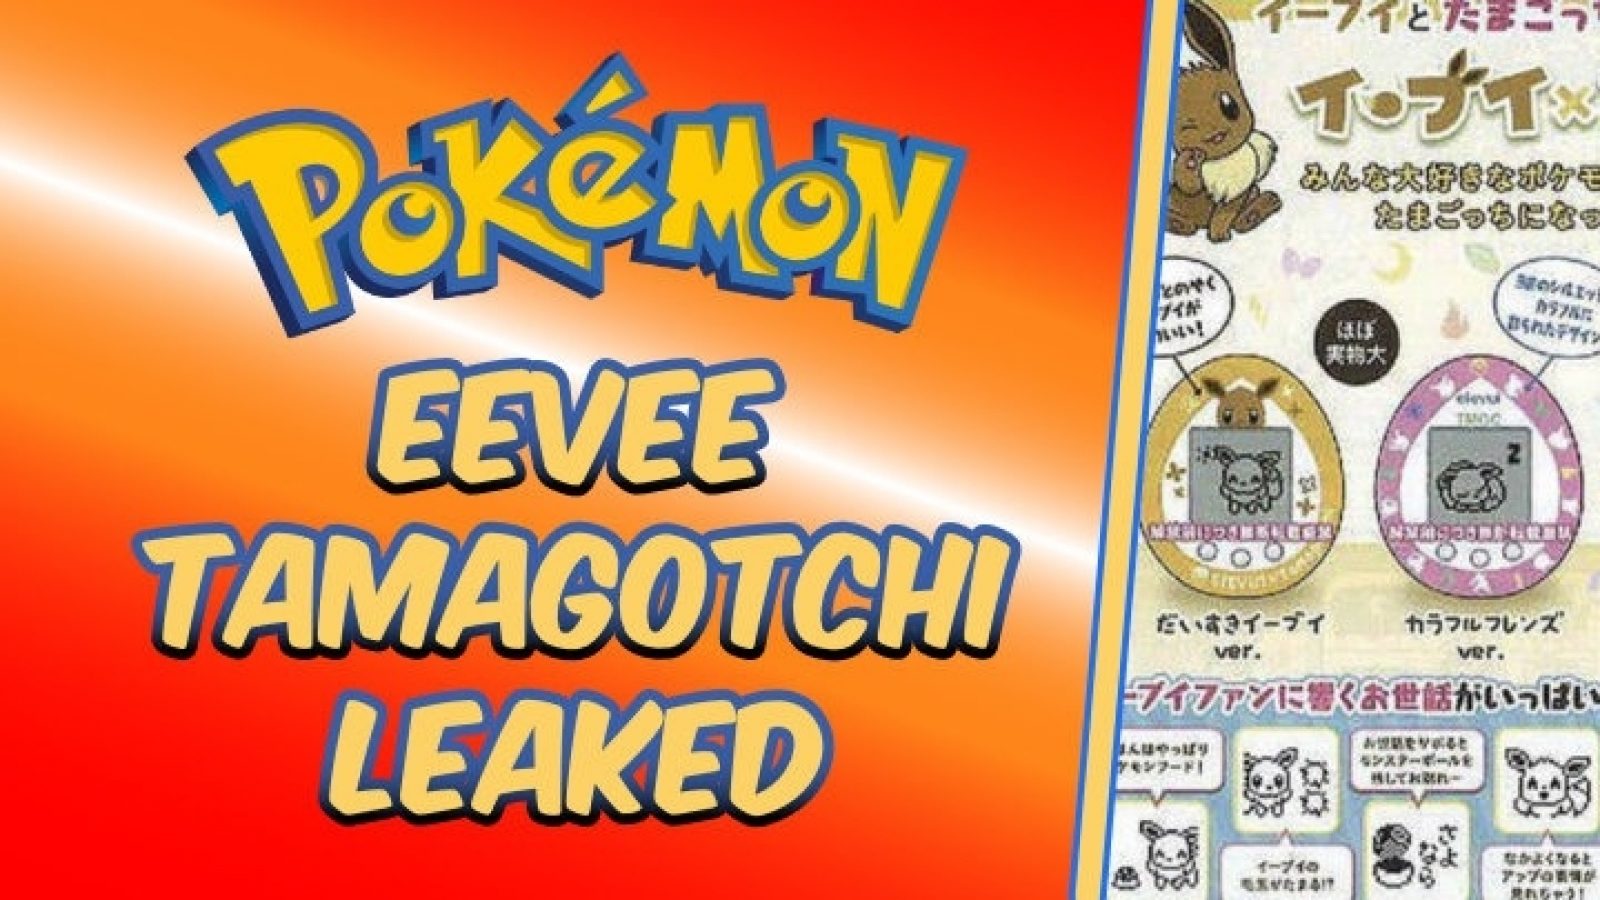 Pokemon Let's Go Eevee Tamagotchi